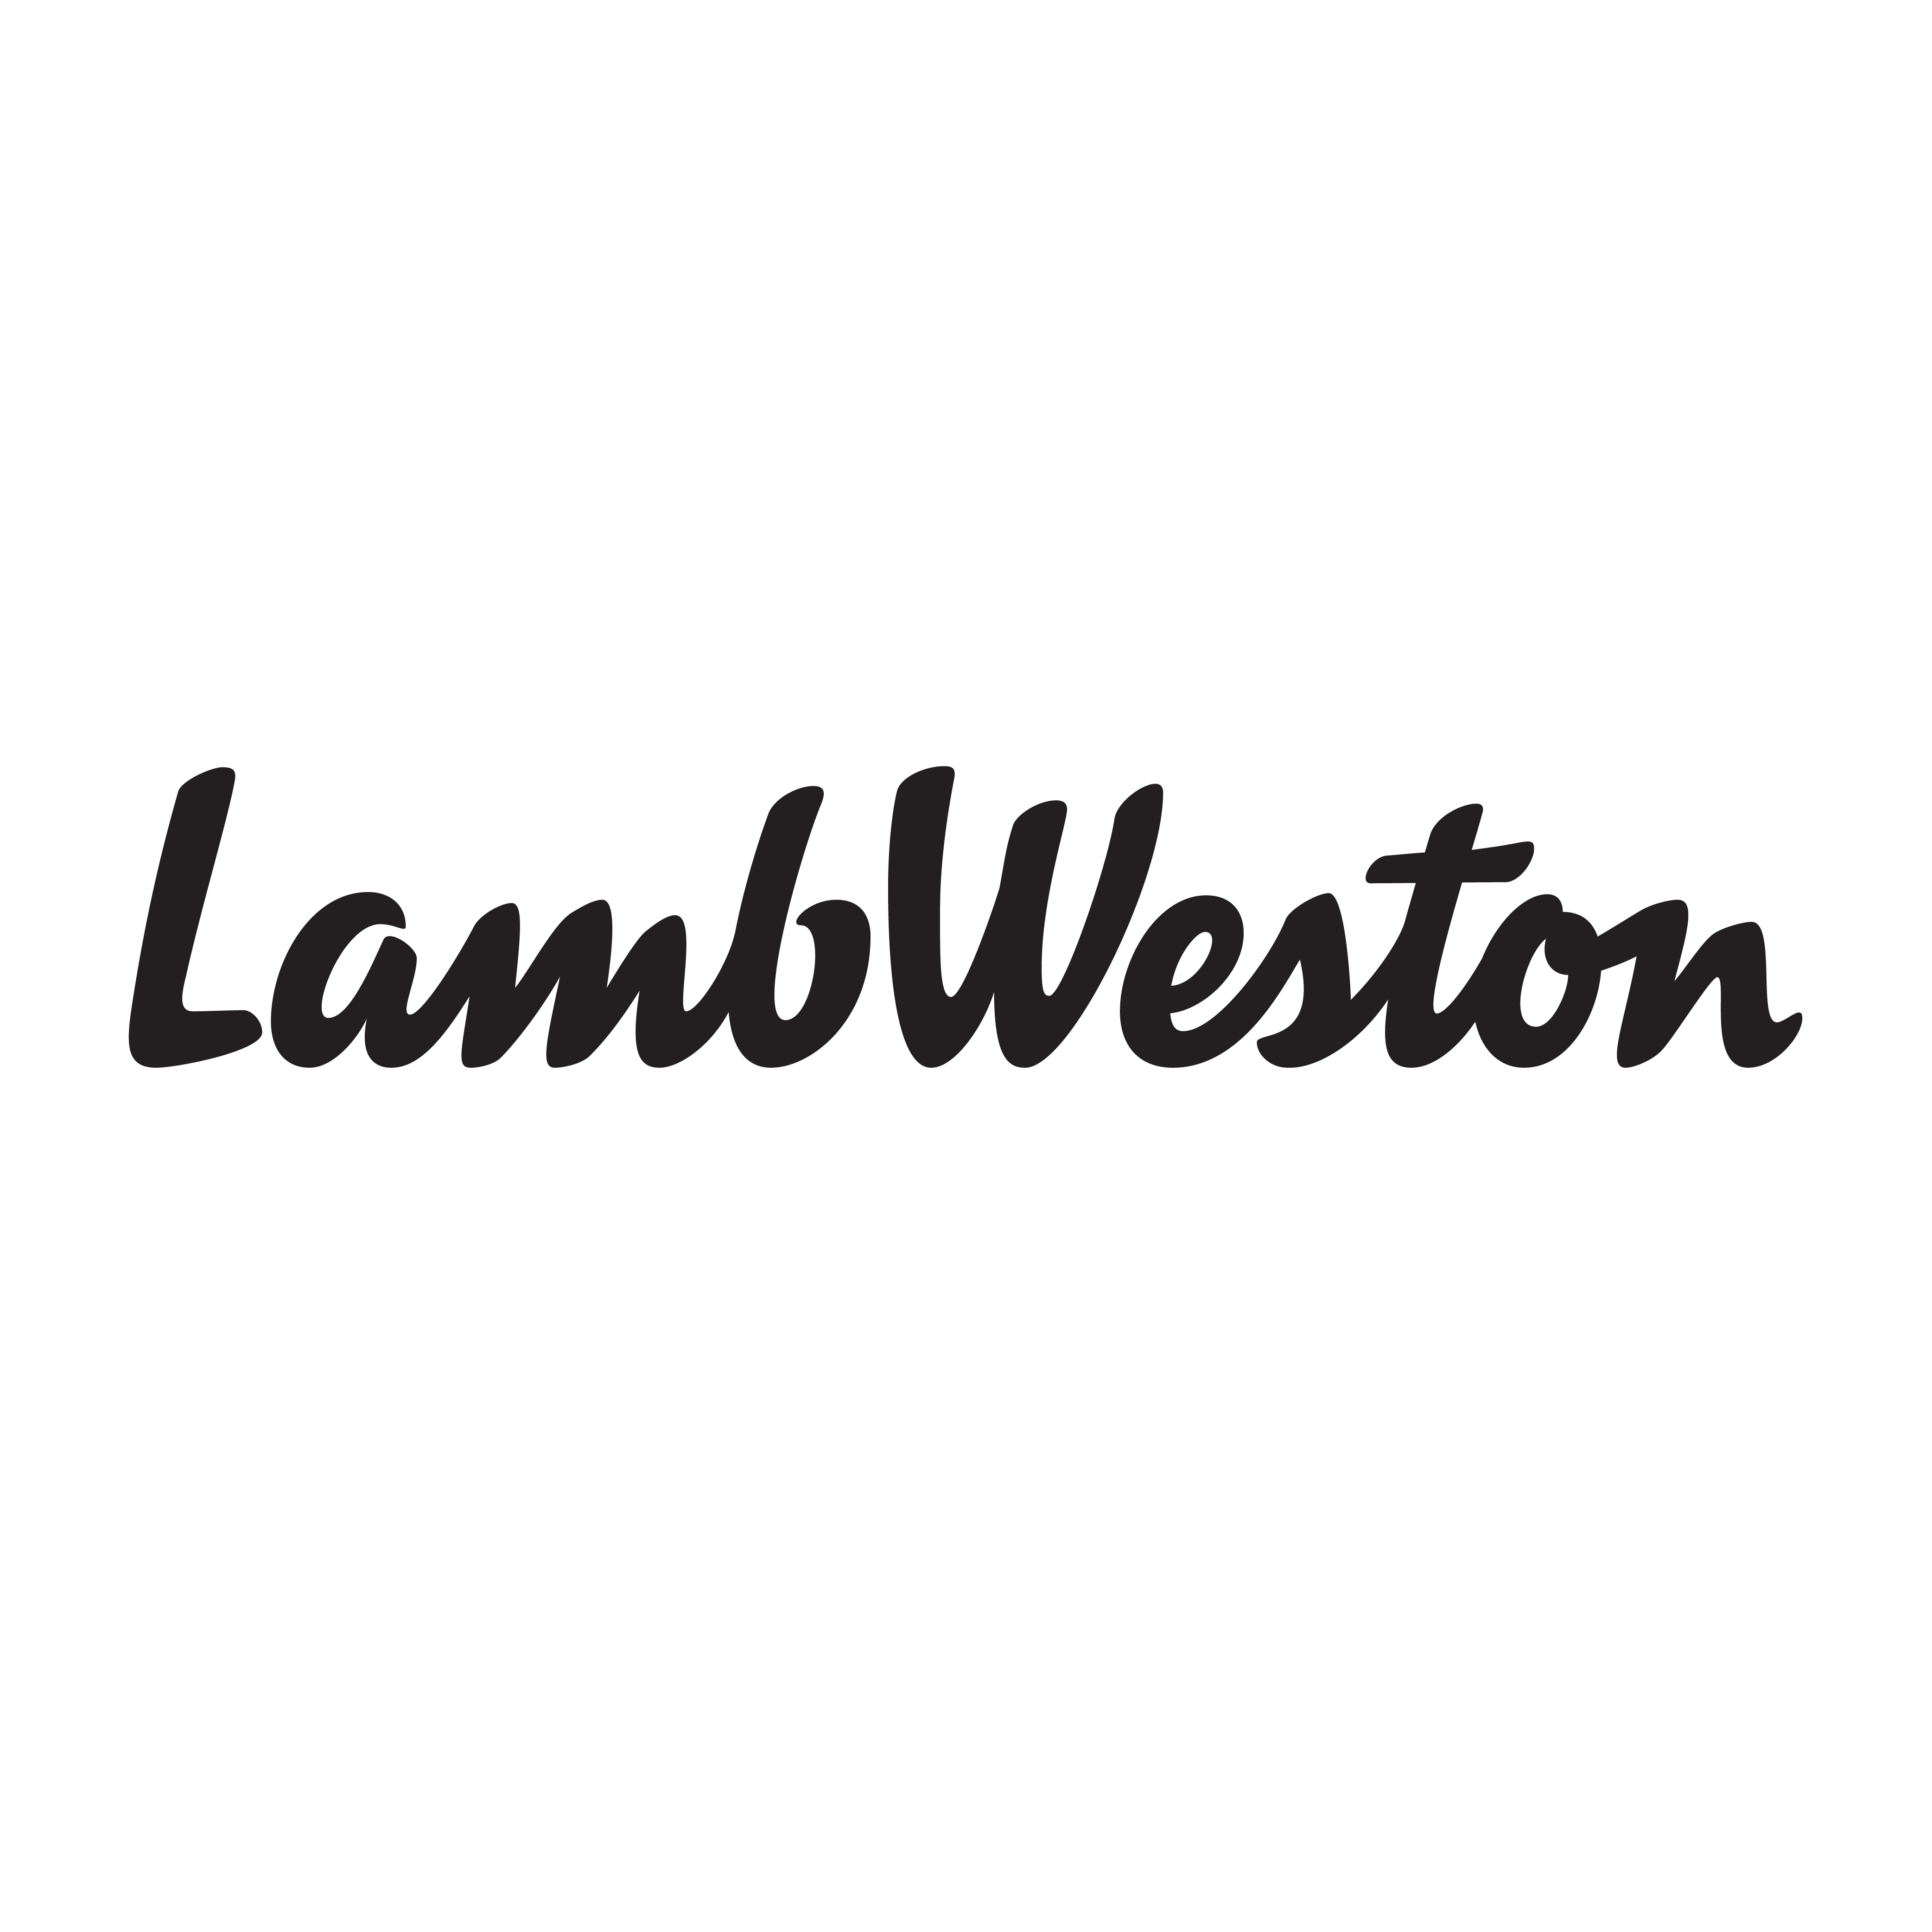 lamb Weston logotype design by Martina Flor